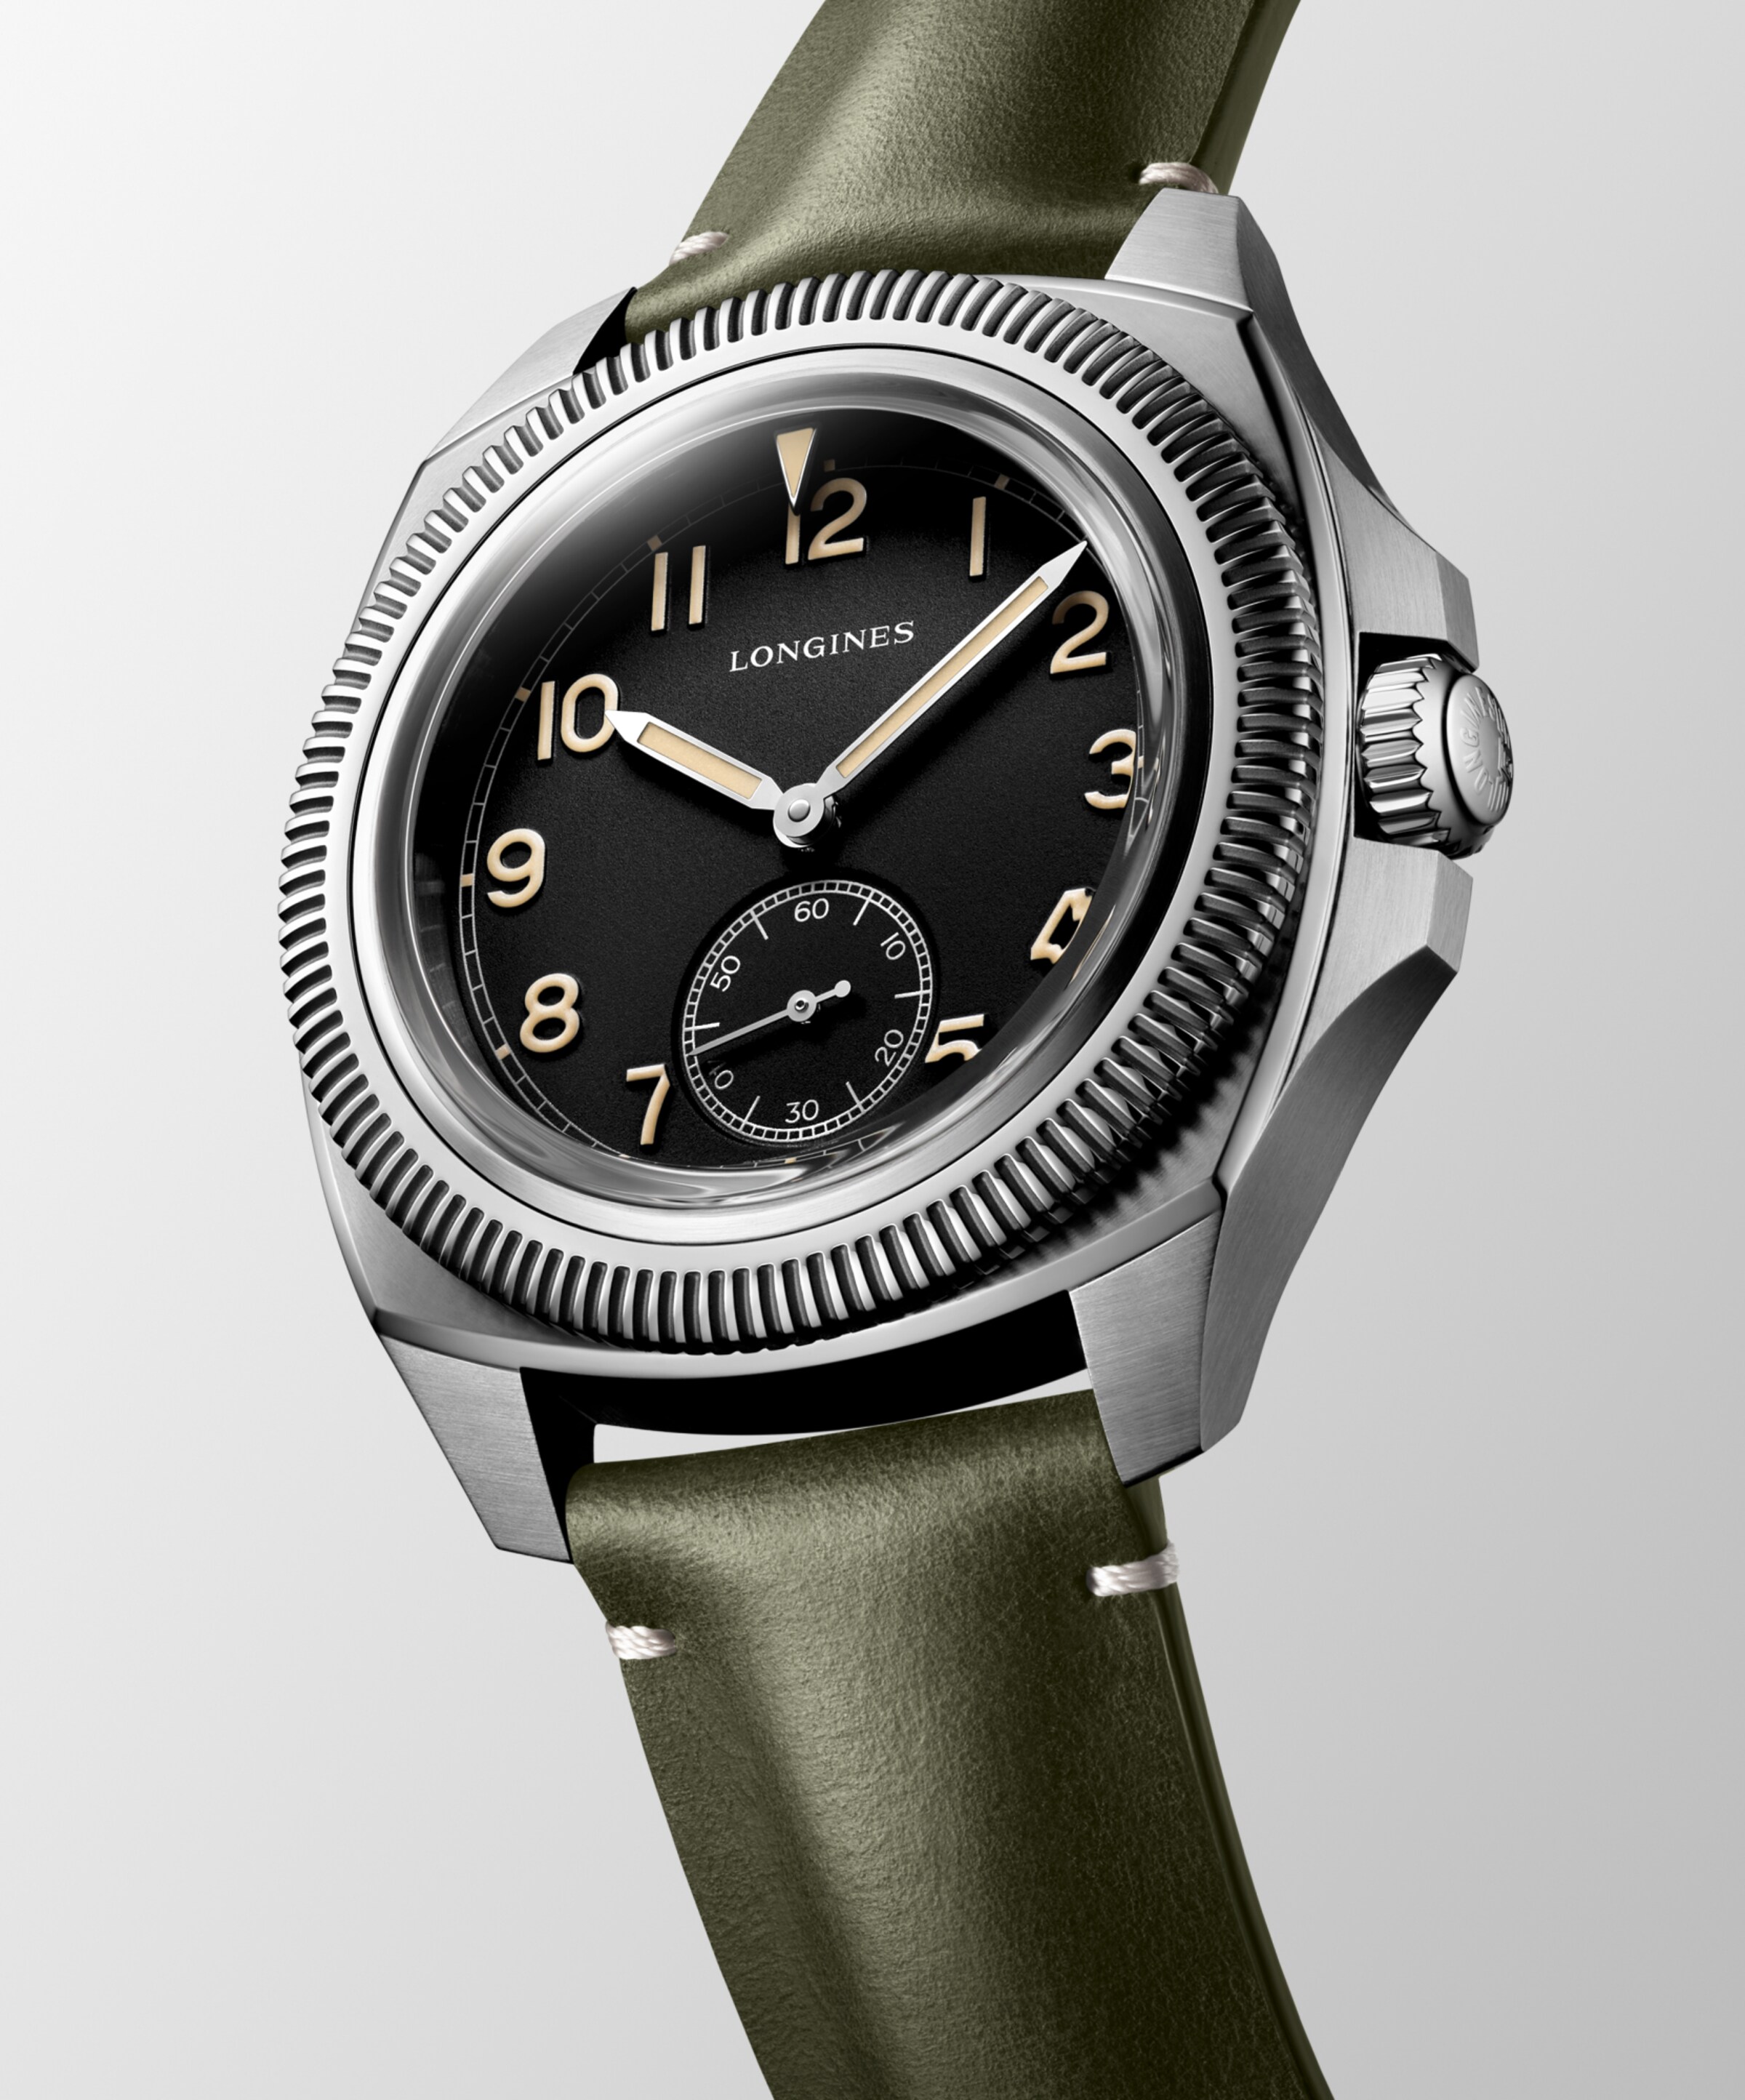 Longines PILOT MAJETEK Automatic Stainless steel Watch - L2.838.4.53.2